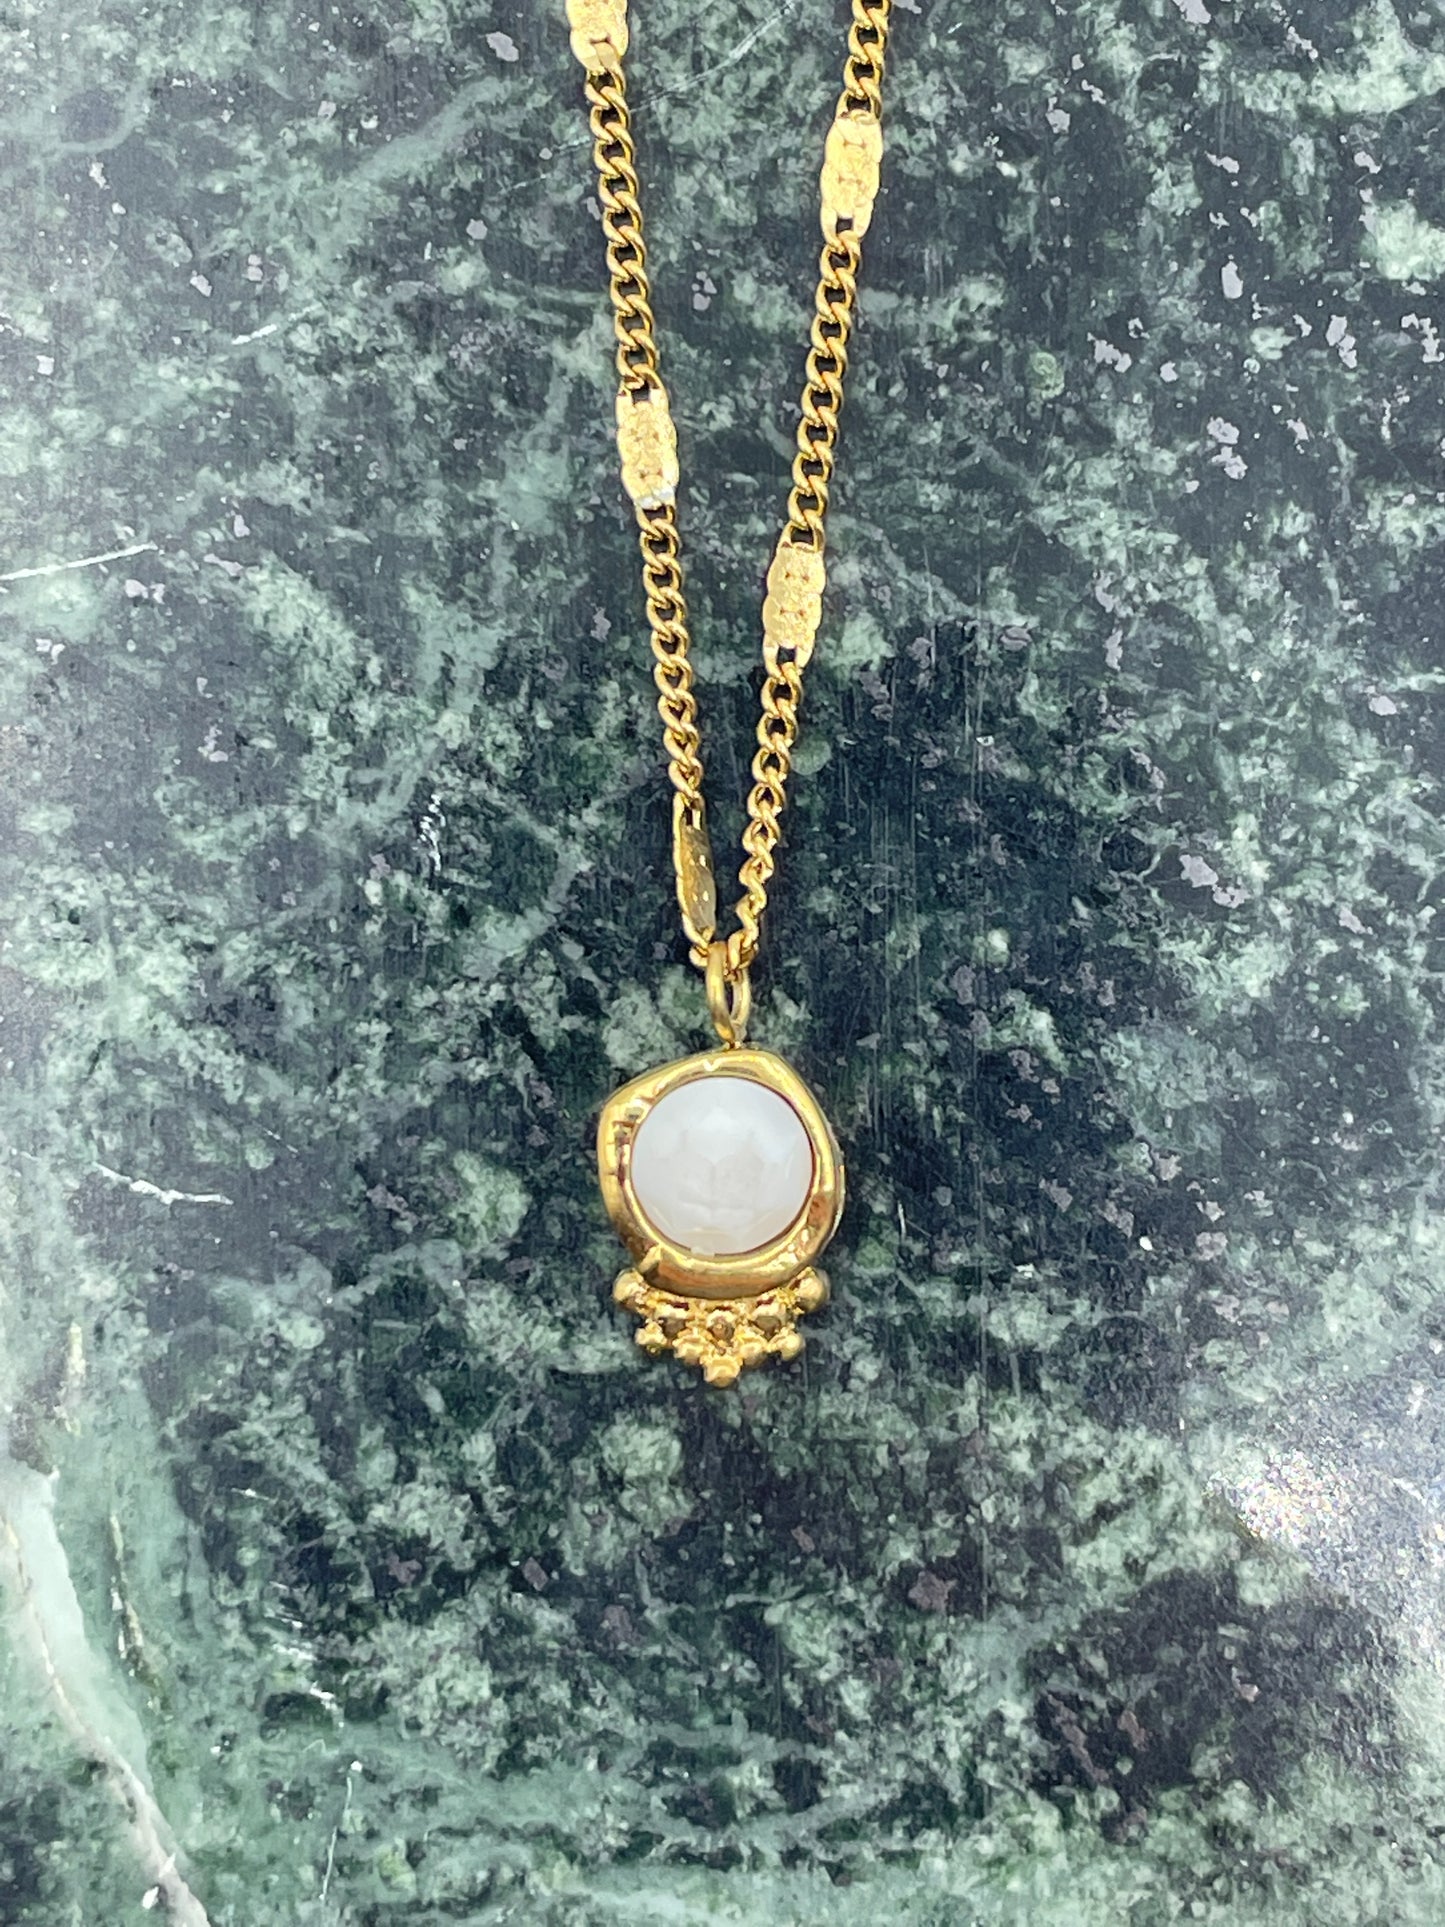 White Pendant Necklace Gold